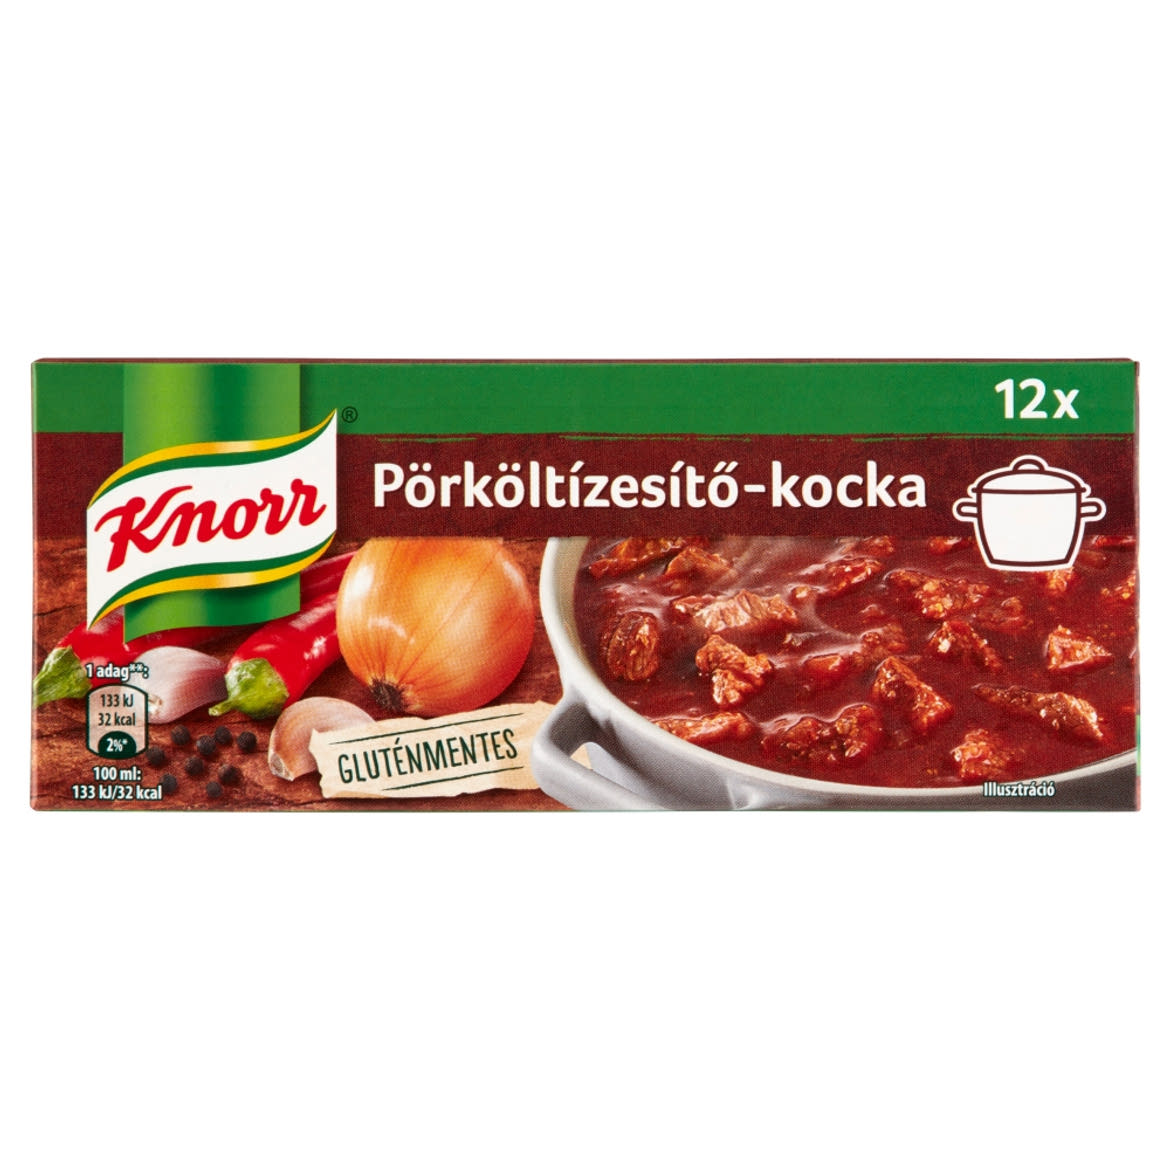 Knorr pörköltízesítő-kocka 12 x